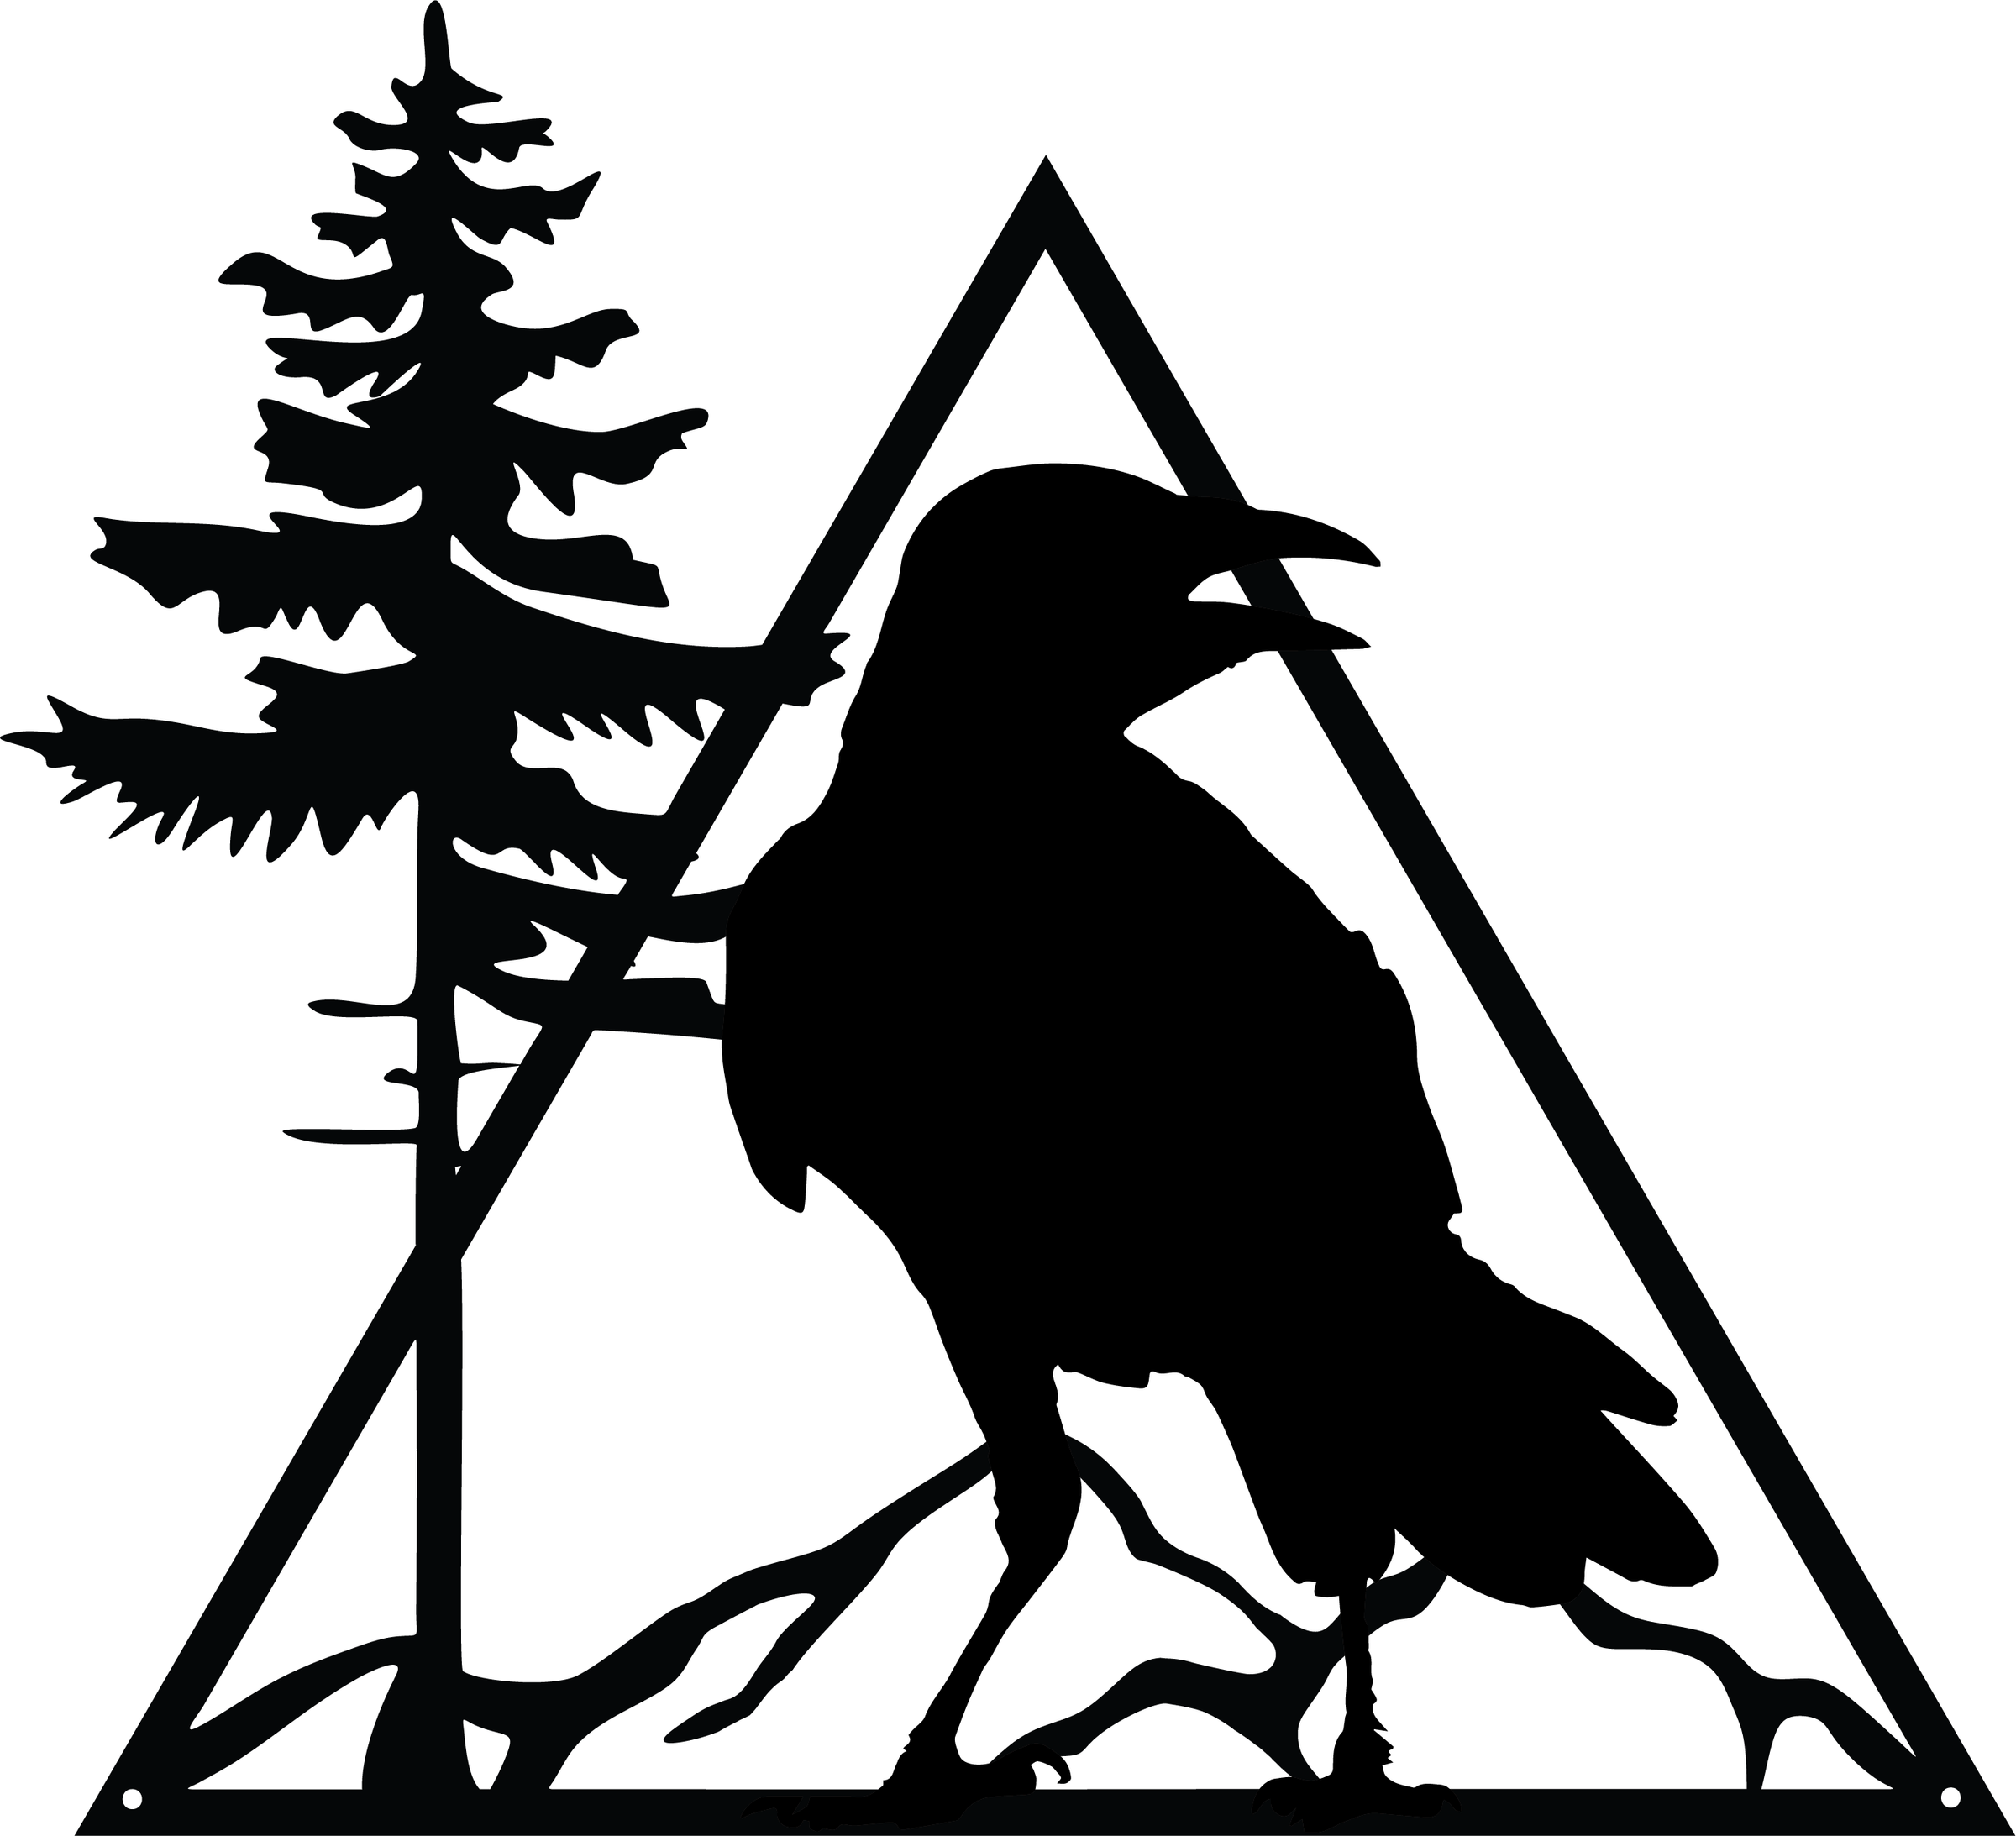 Raven Triangle